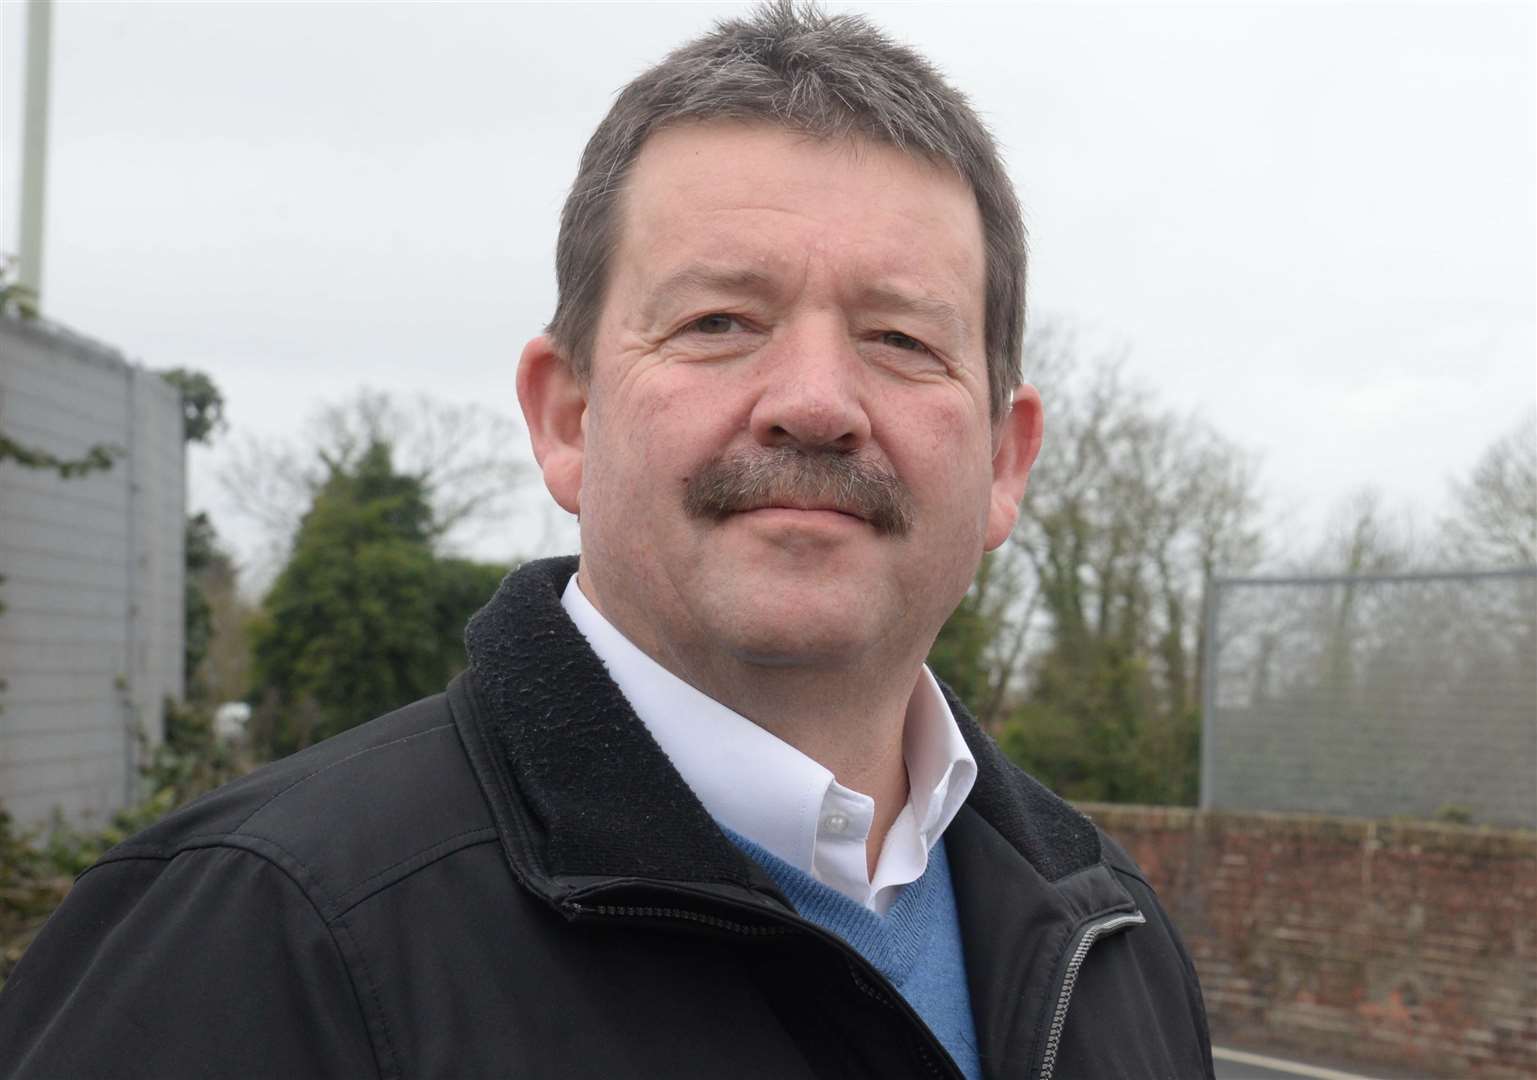 Belting councillor Ian Stockley